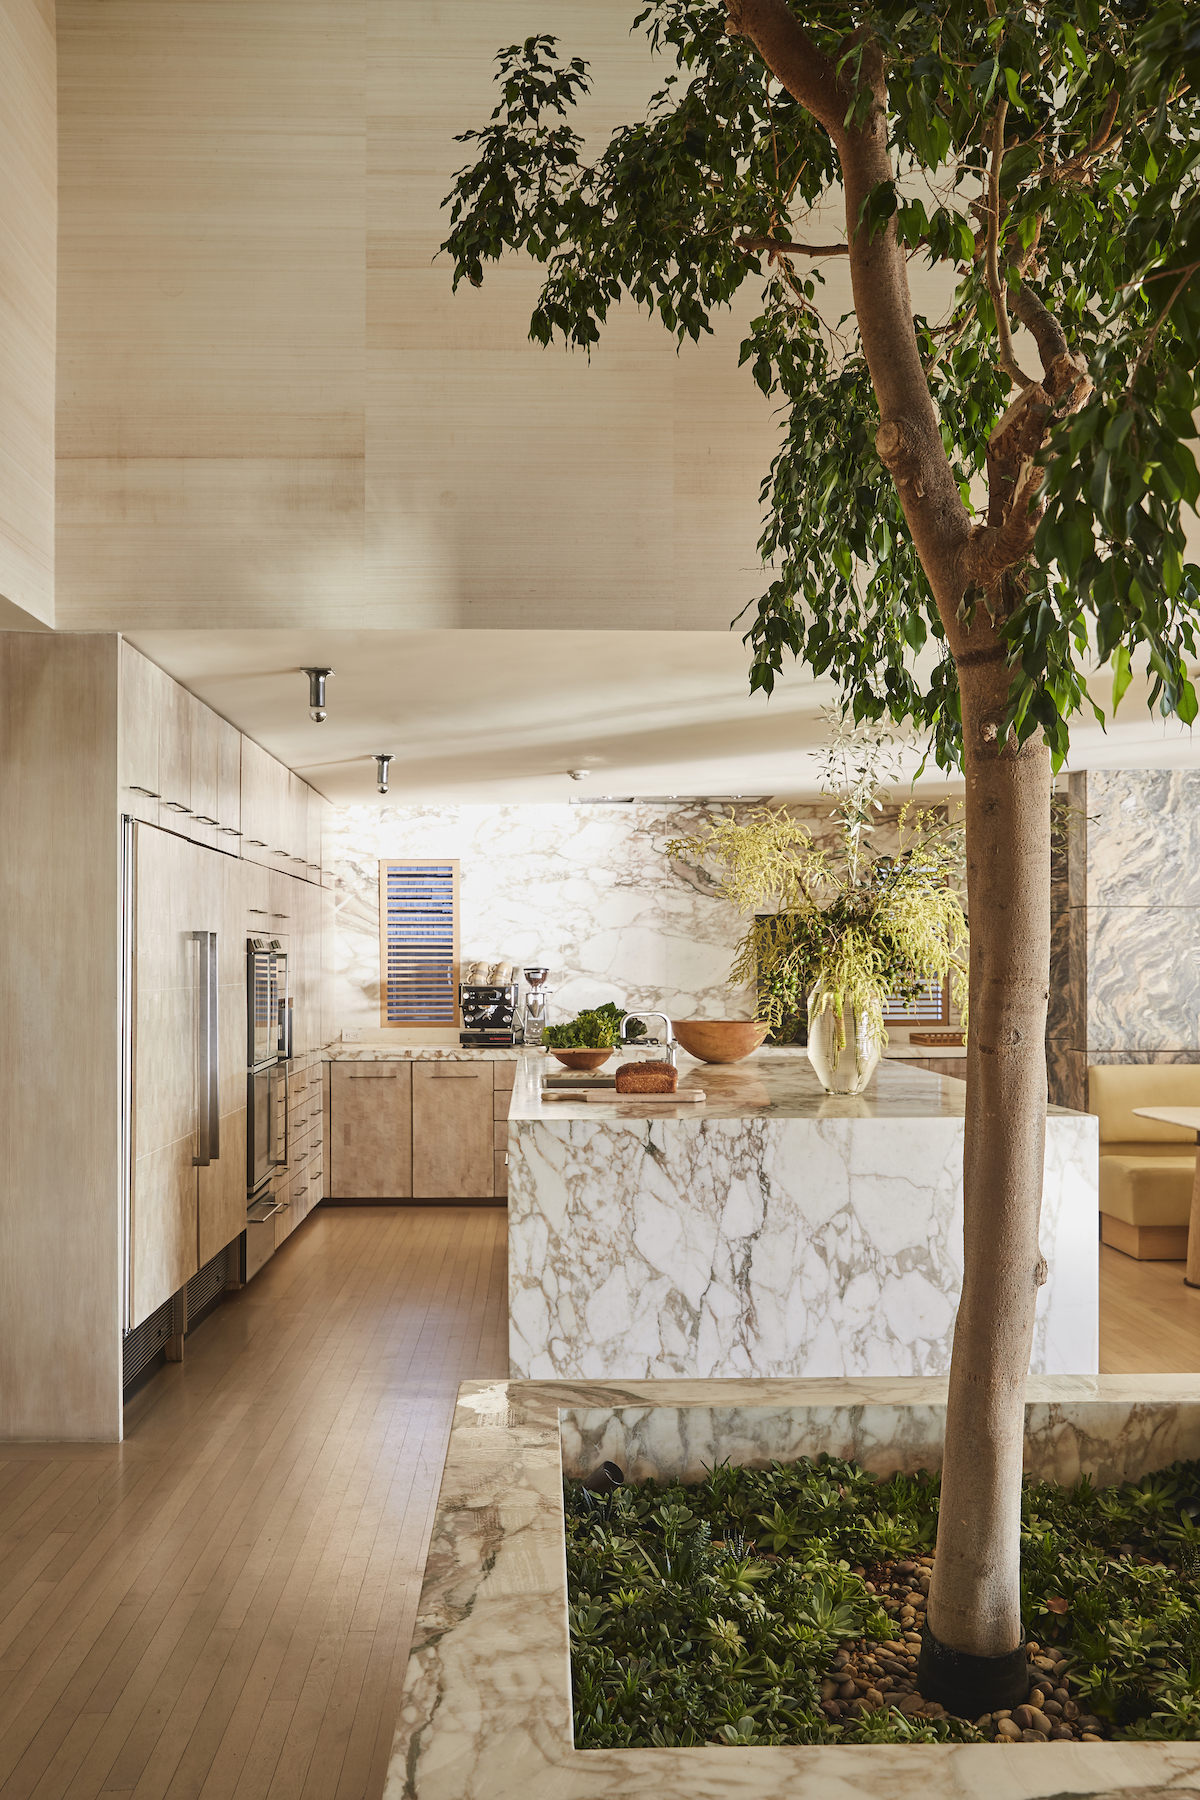 Kitchen in the Malibu home of interior designer Kelly Wearstler in Effect Magazine